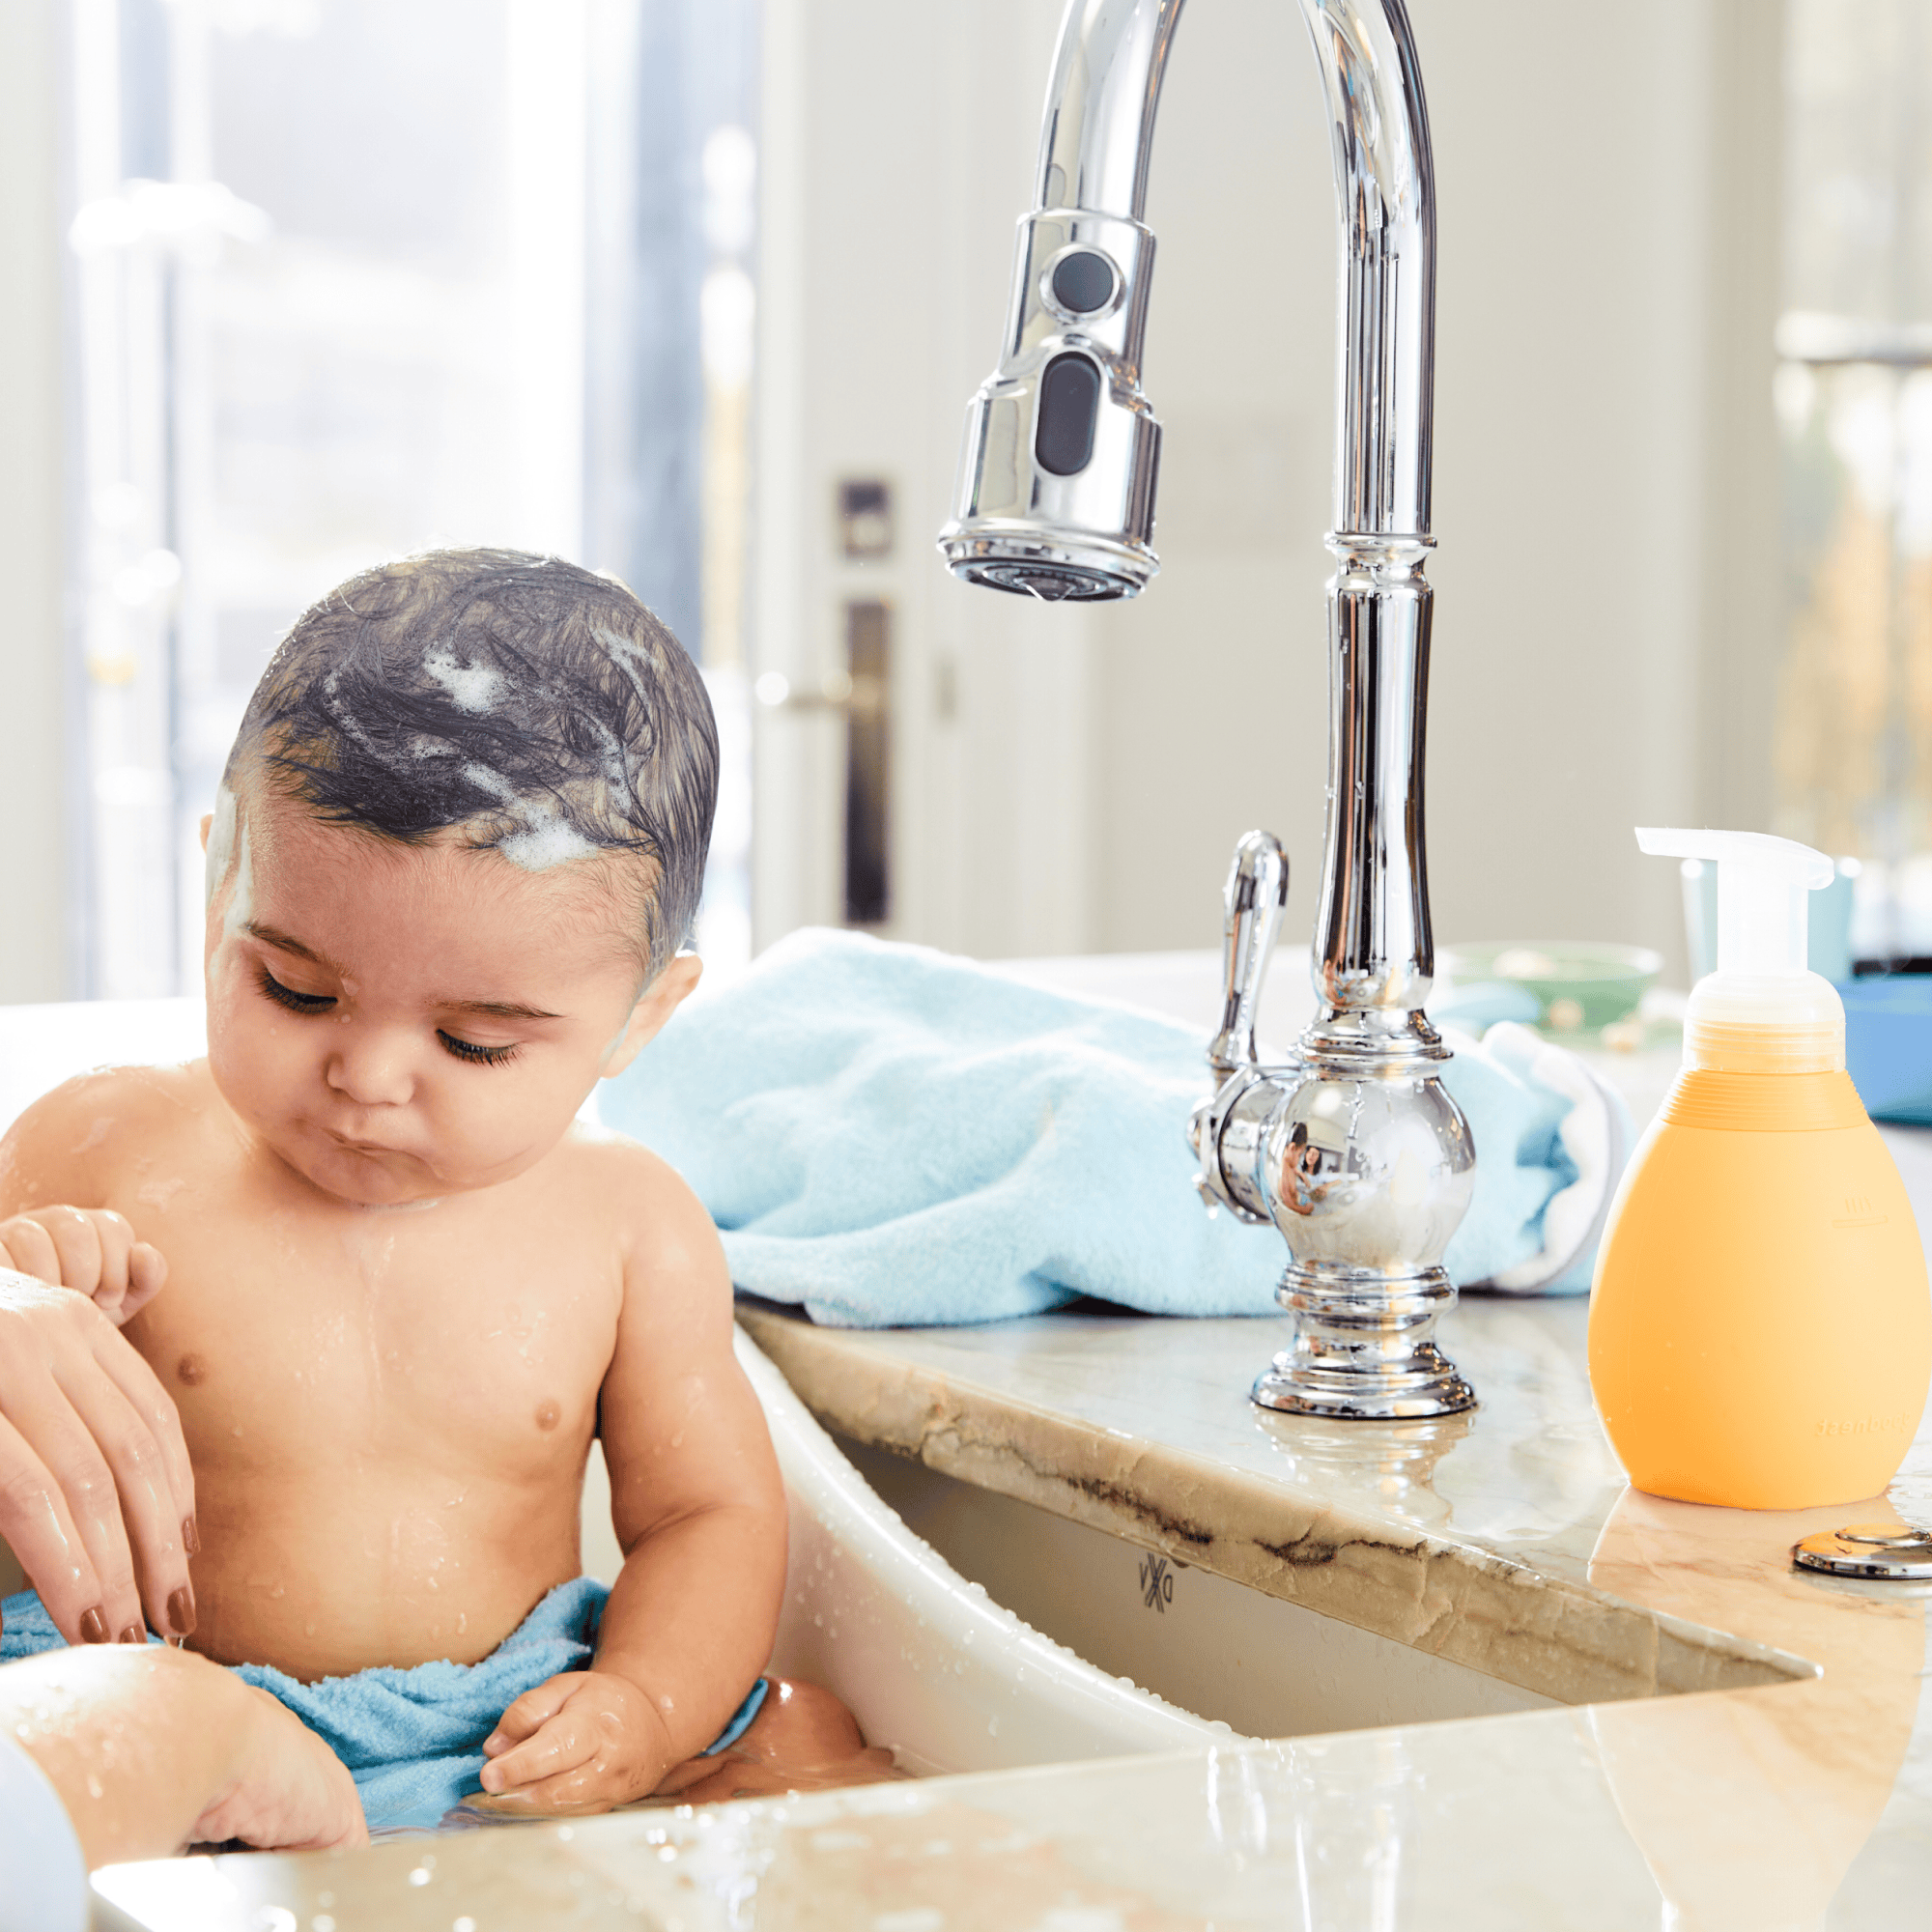 Johnson's Baby Shampoo : TAP Plastics